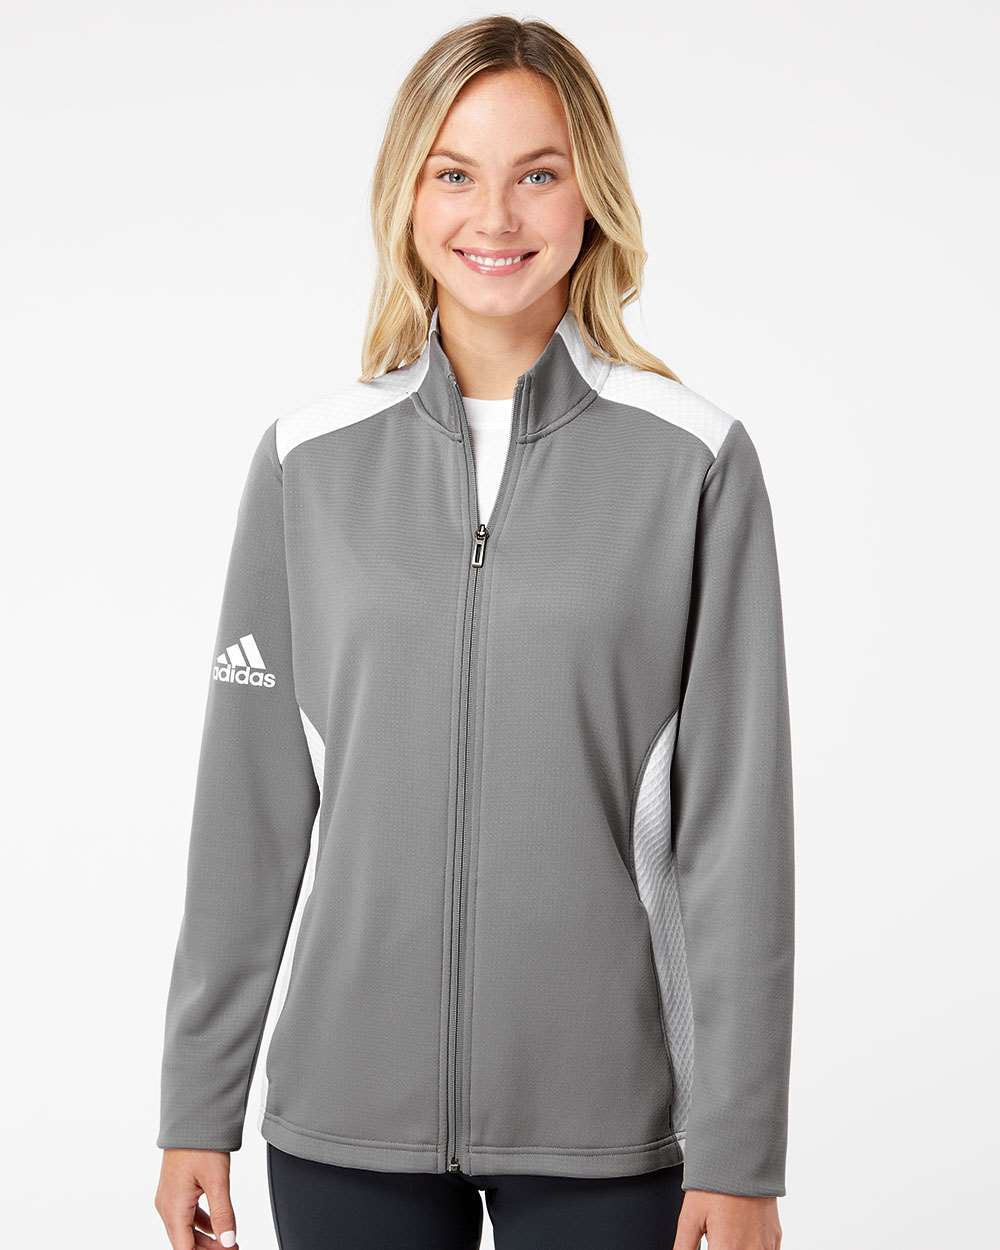 Adidas - Women's Textured Mixed Media Full-Zip Jacket - A529